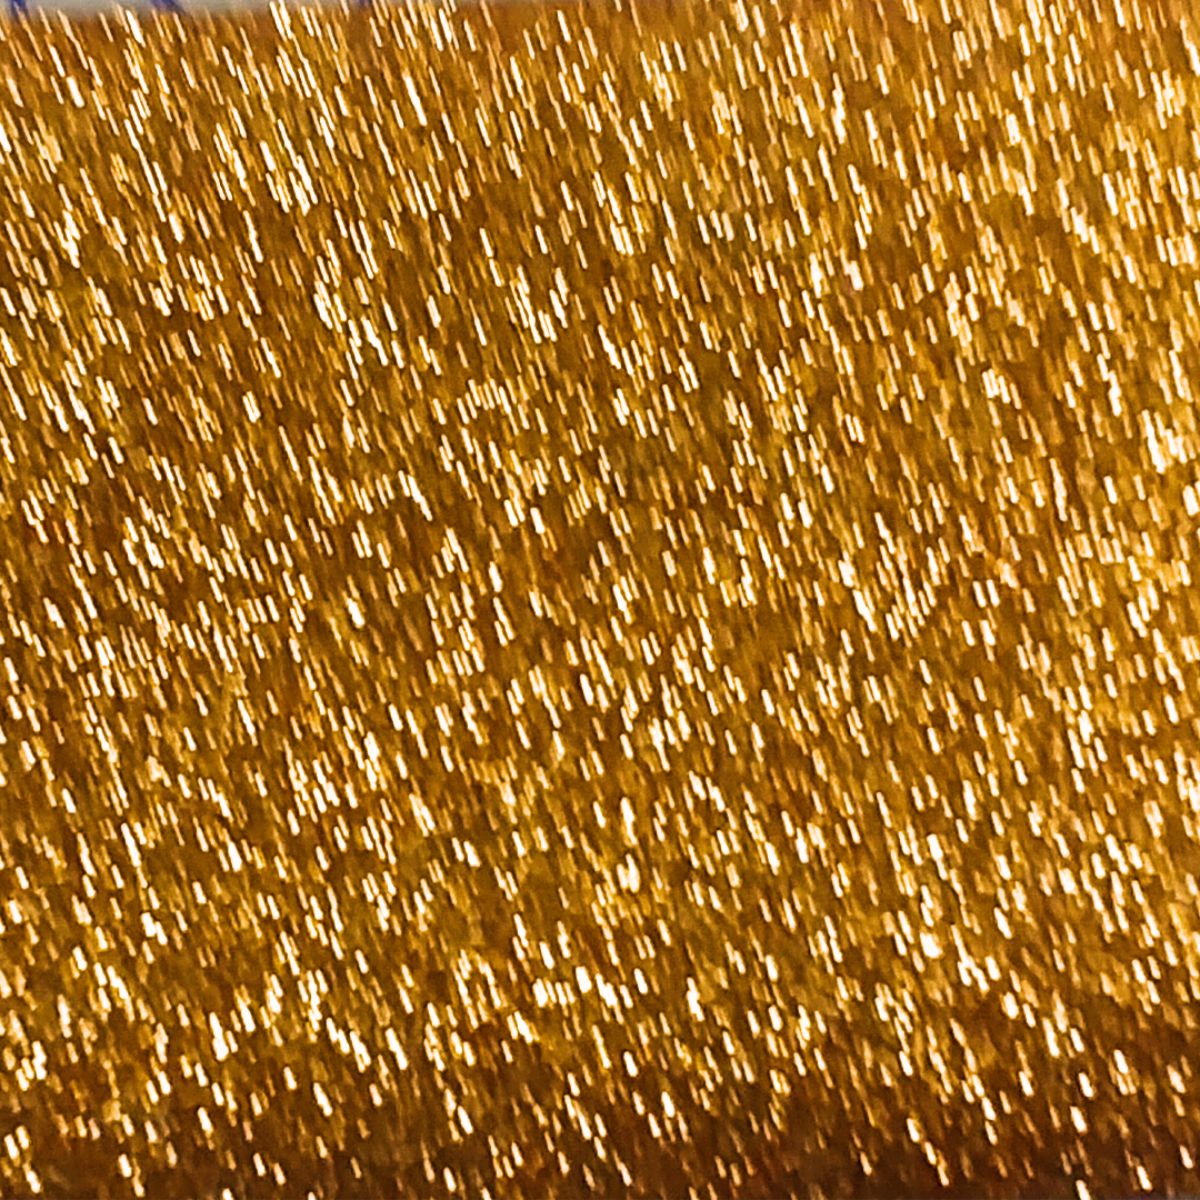 Dark Gold Cosmetic Glitter, 10g